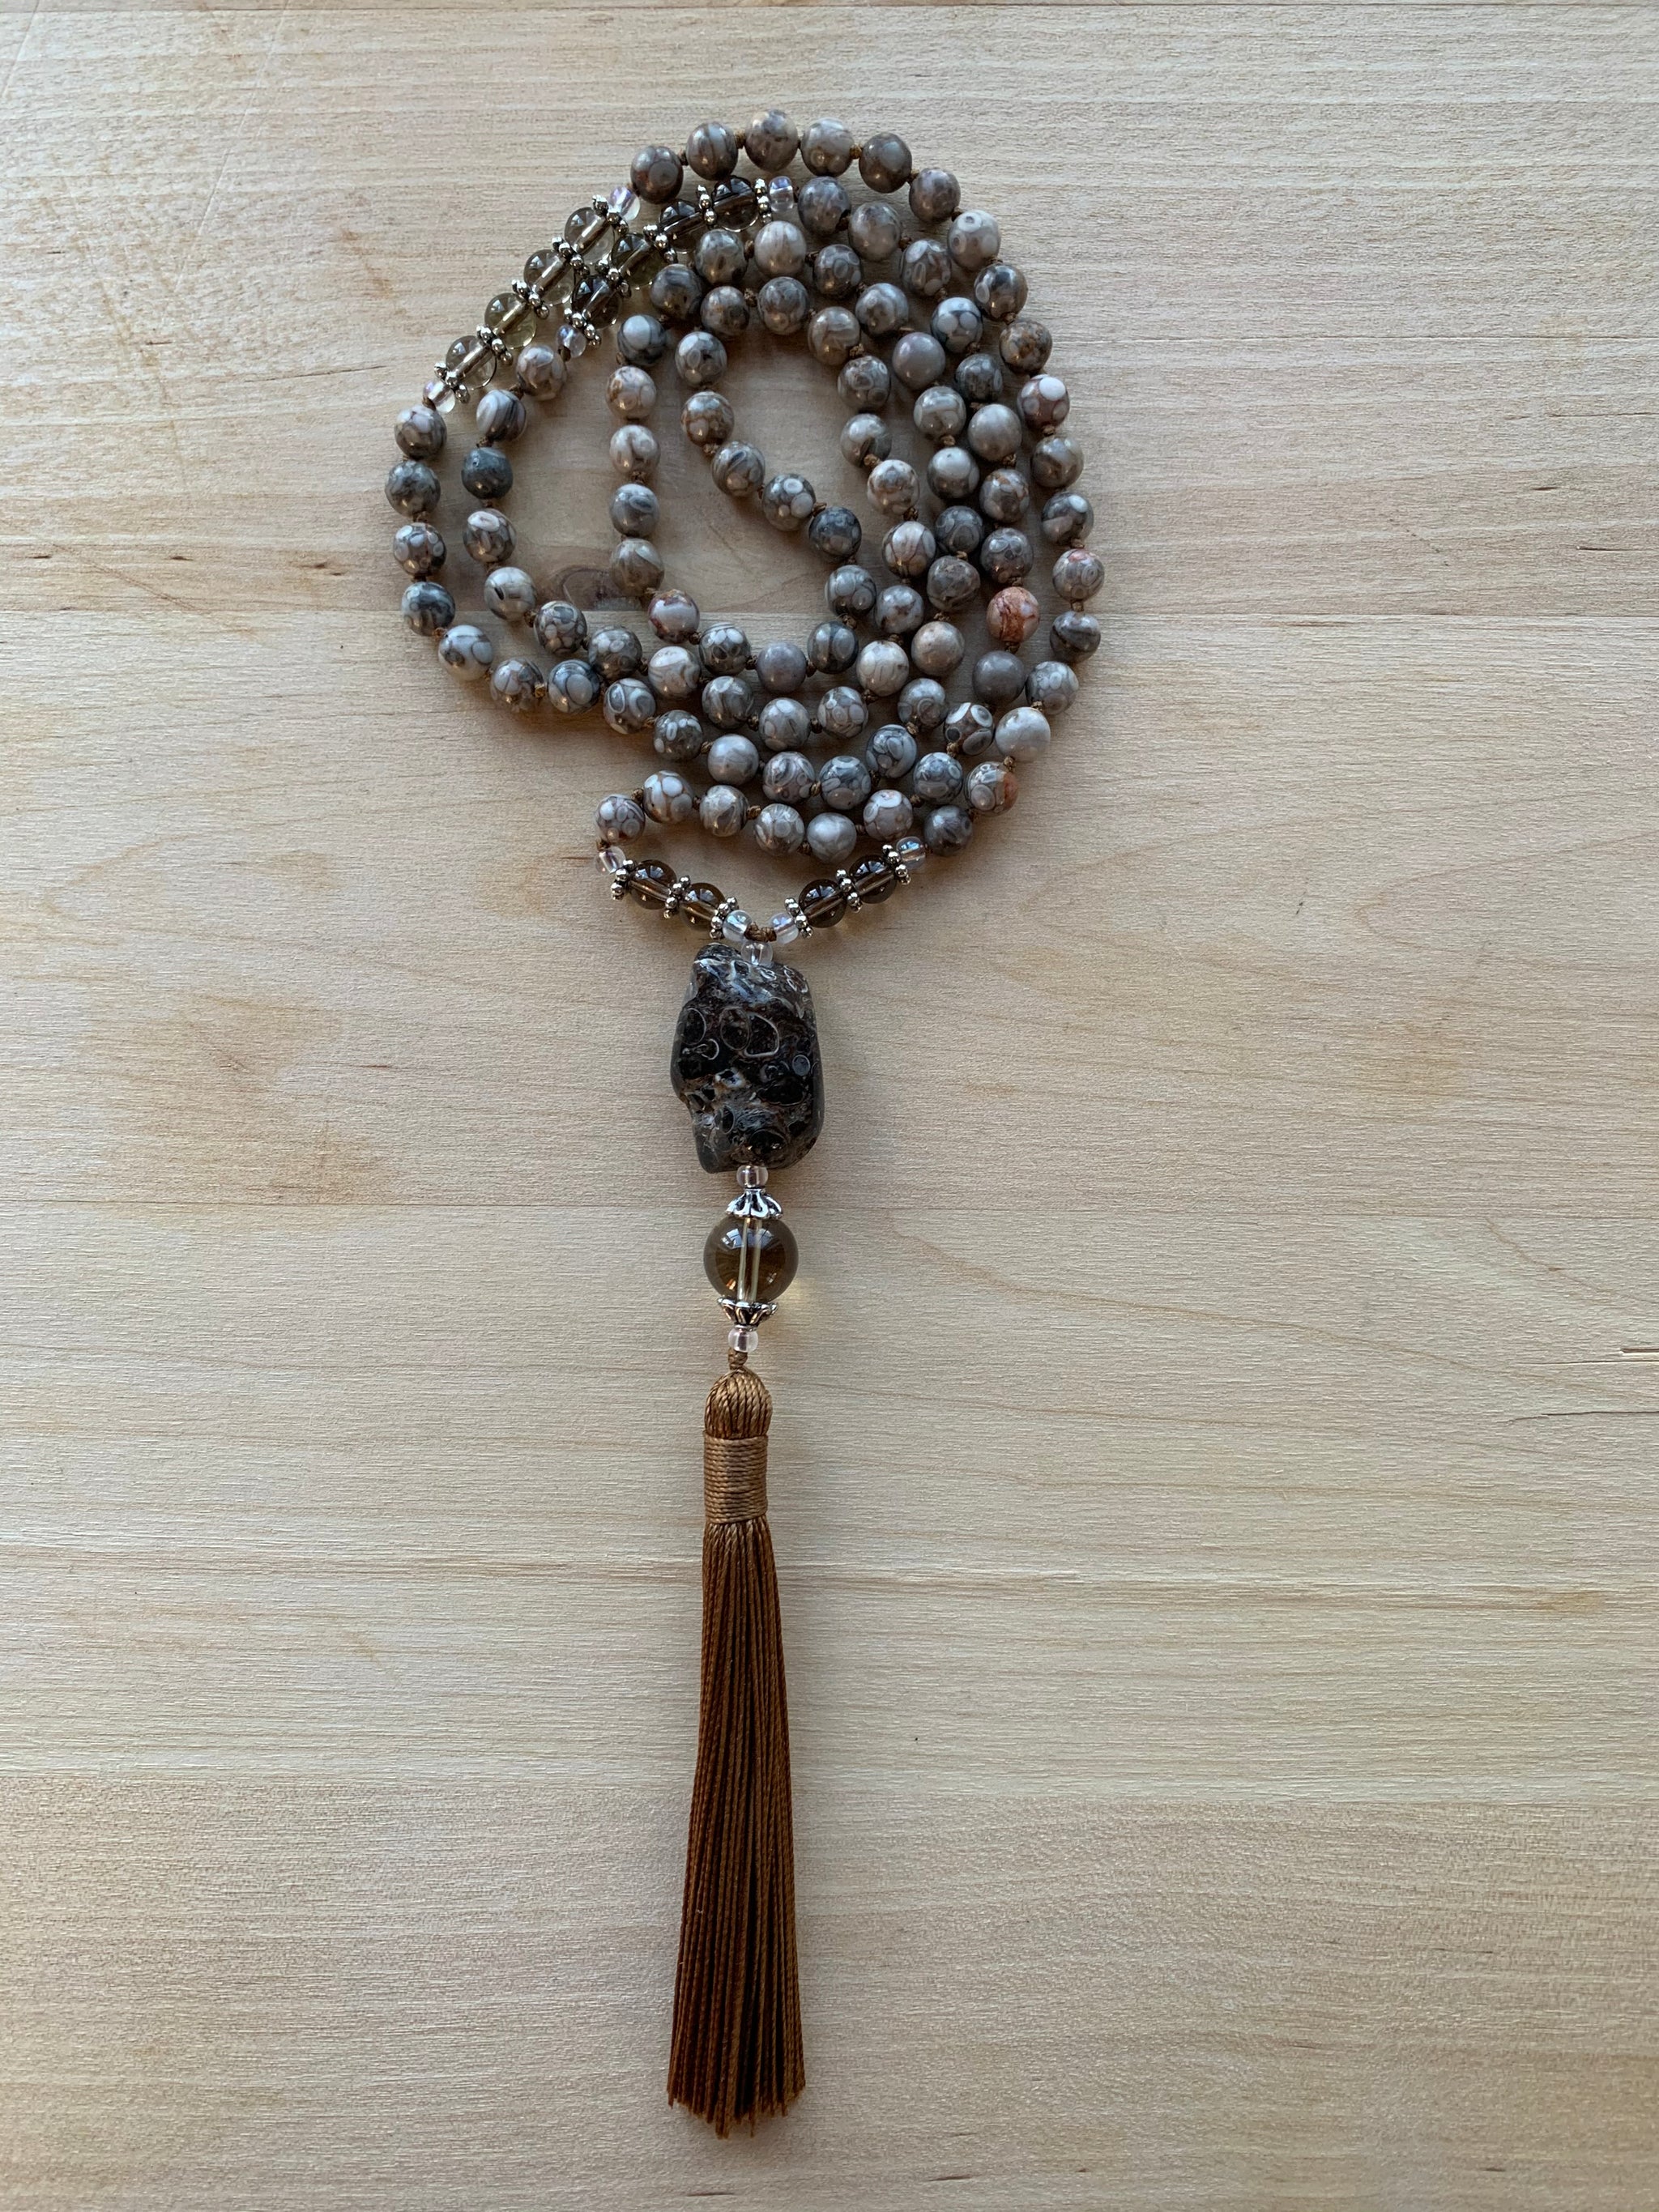 Bivei 108 Mala Beads Necklace Tree of Life 7 Chakra Wrap Bracelet Real  Healing Gemstone Yoga Meditation Hand Knotted Mala Prayer Bead Necklace